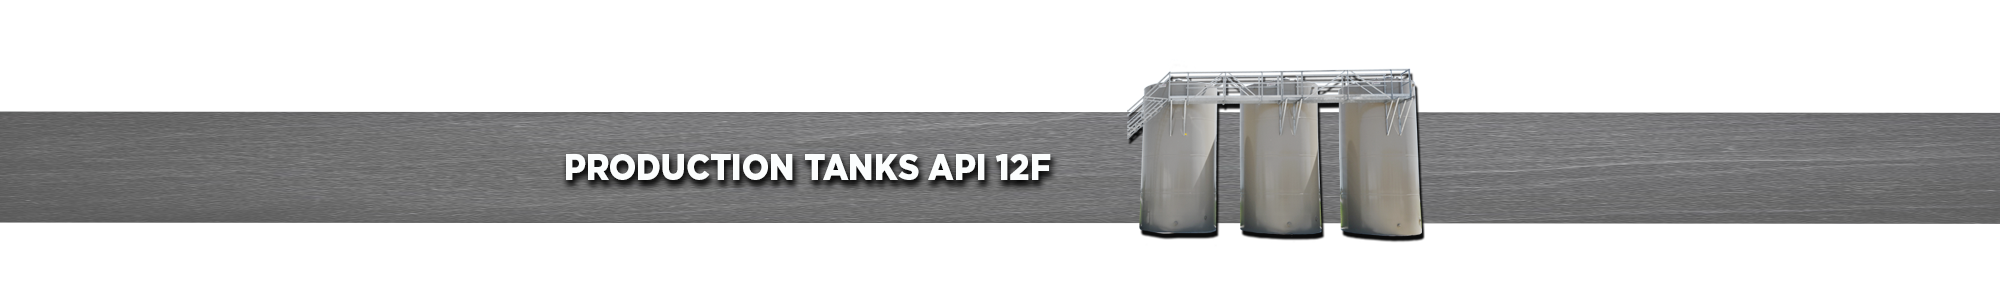 Production Tank API 12 F